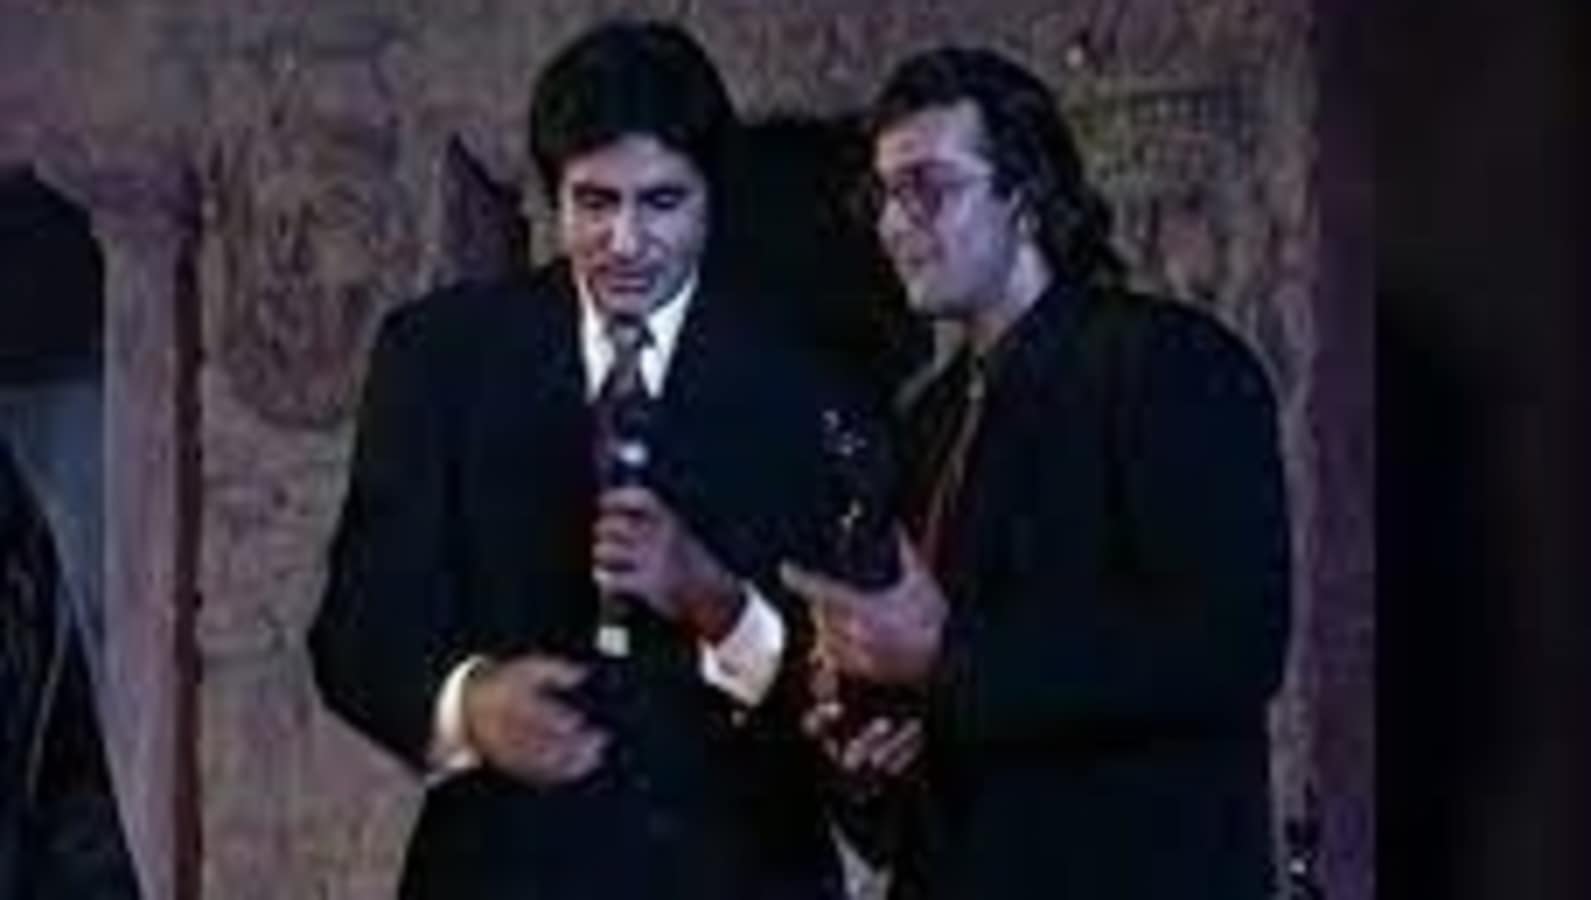 When Amitabh Bachchan gave his Best Actor award to Sanjay Dutt, Aamir